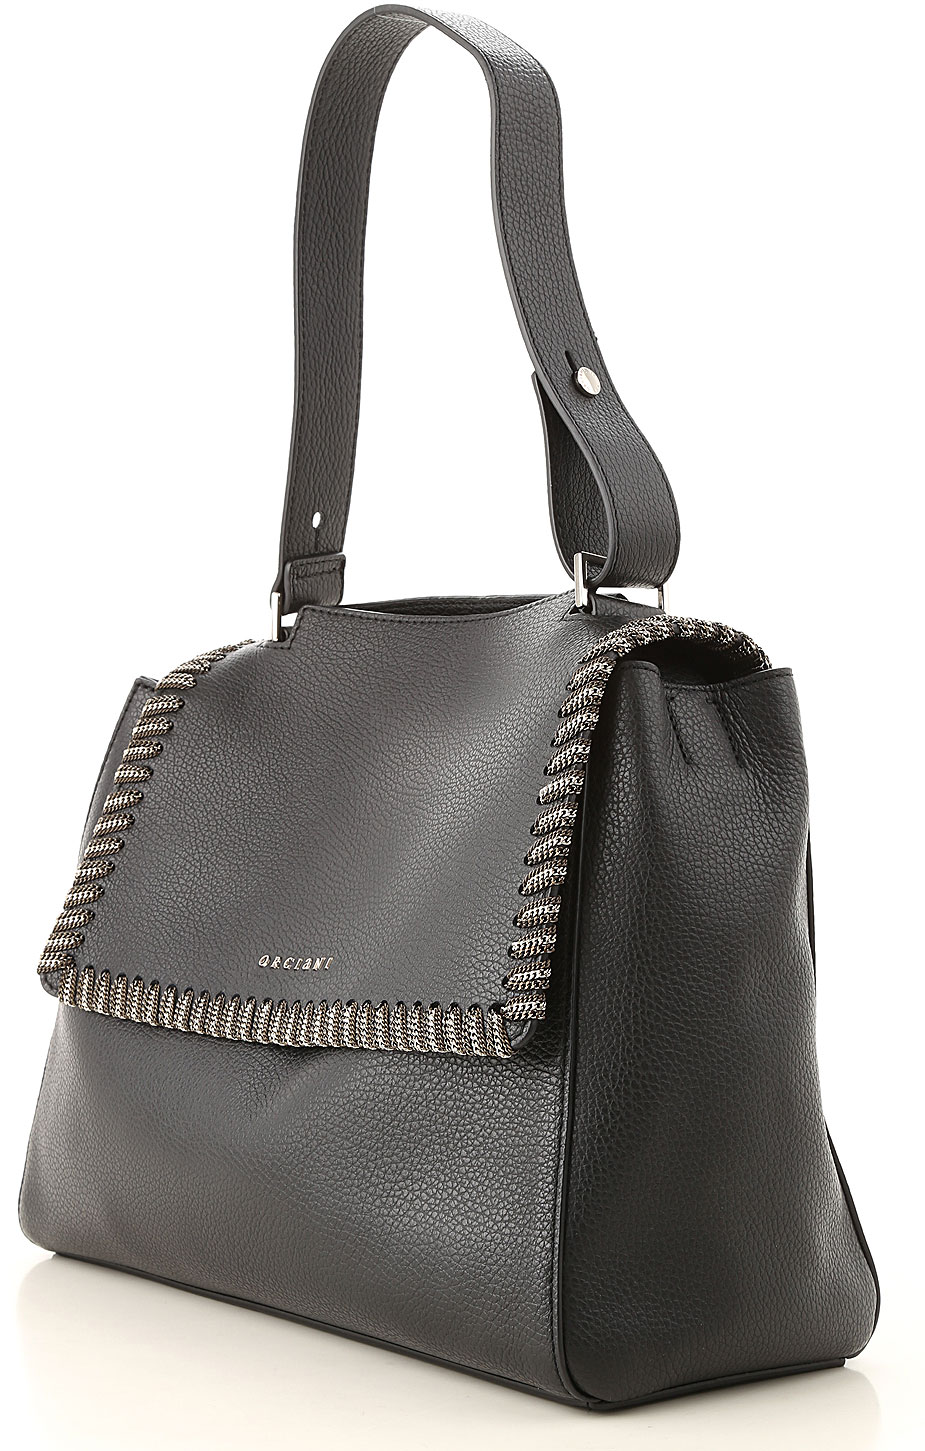 Handbags Orciani, Style code: b2006-svevachain-nero